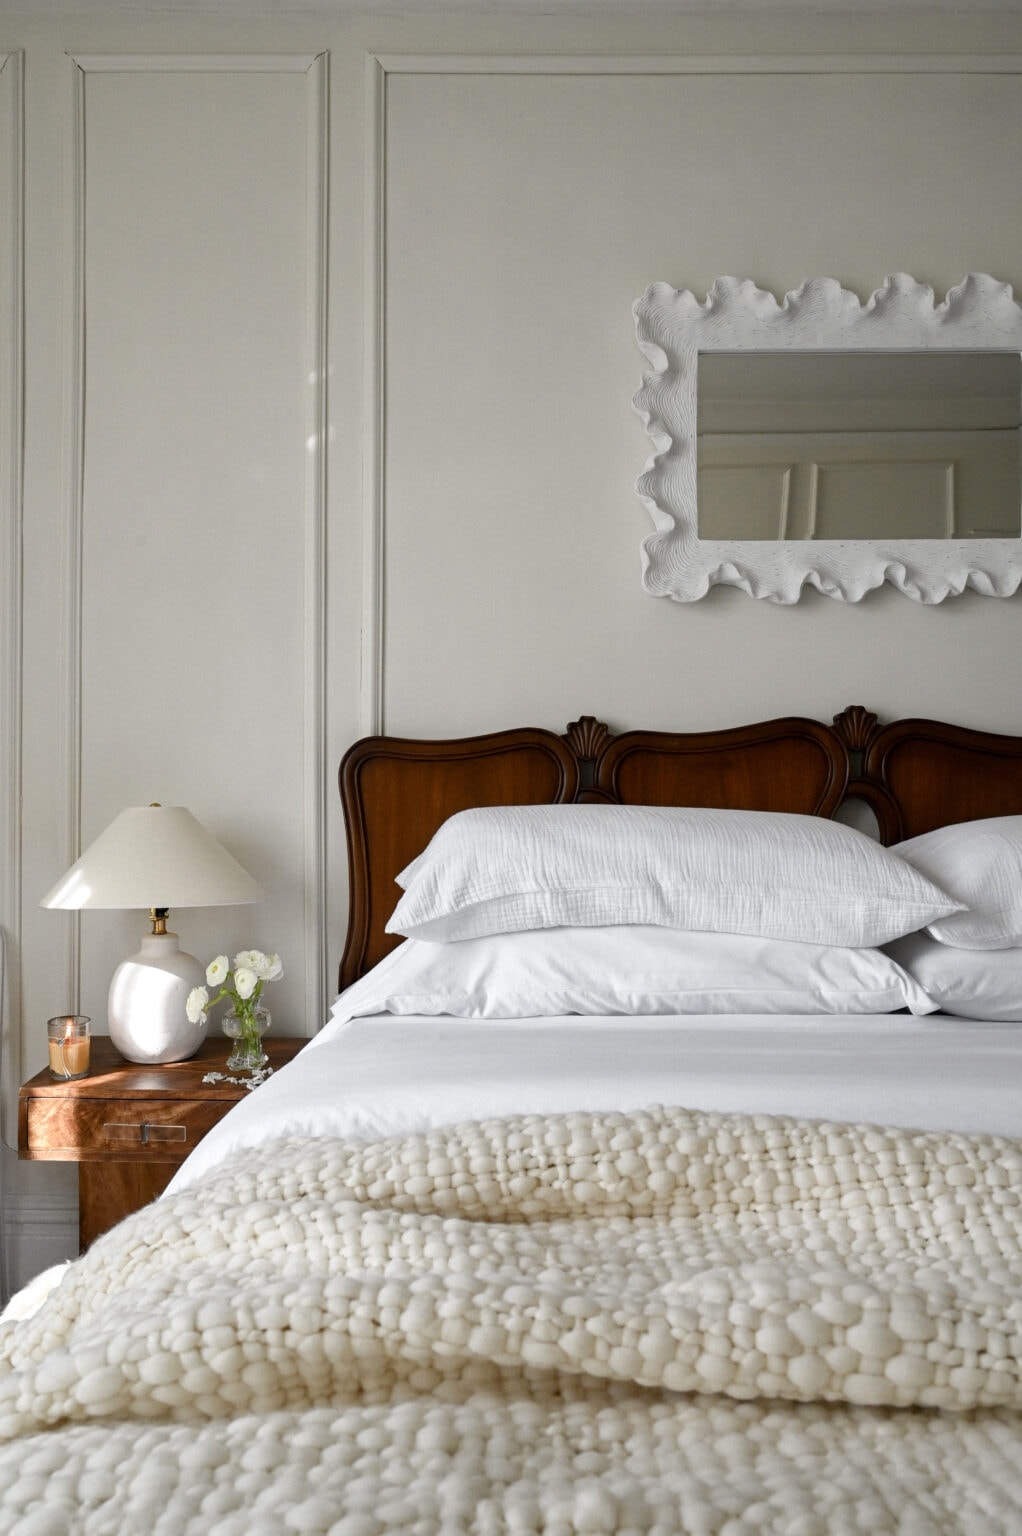 Quiet luxury style bedroom room example in home decor